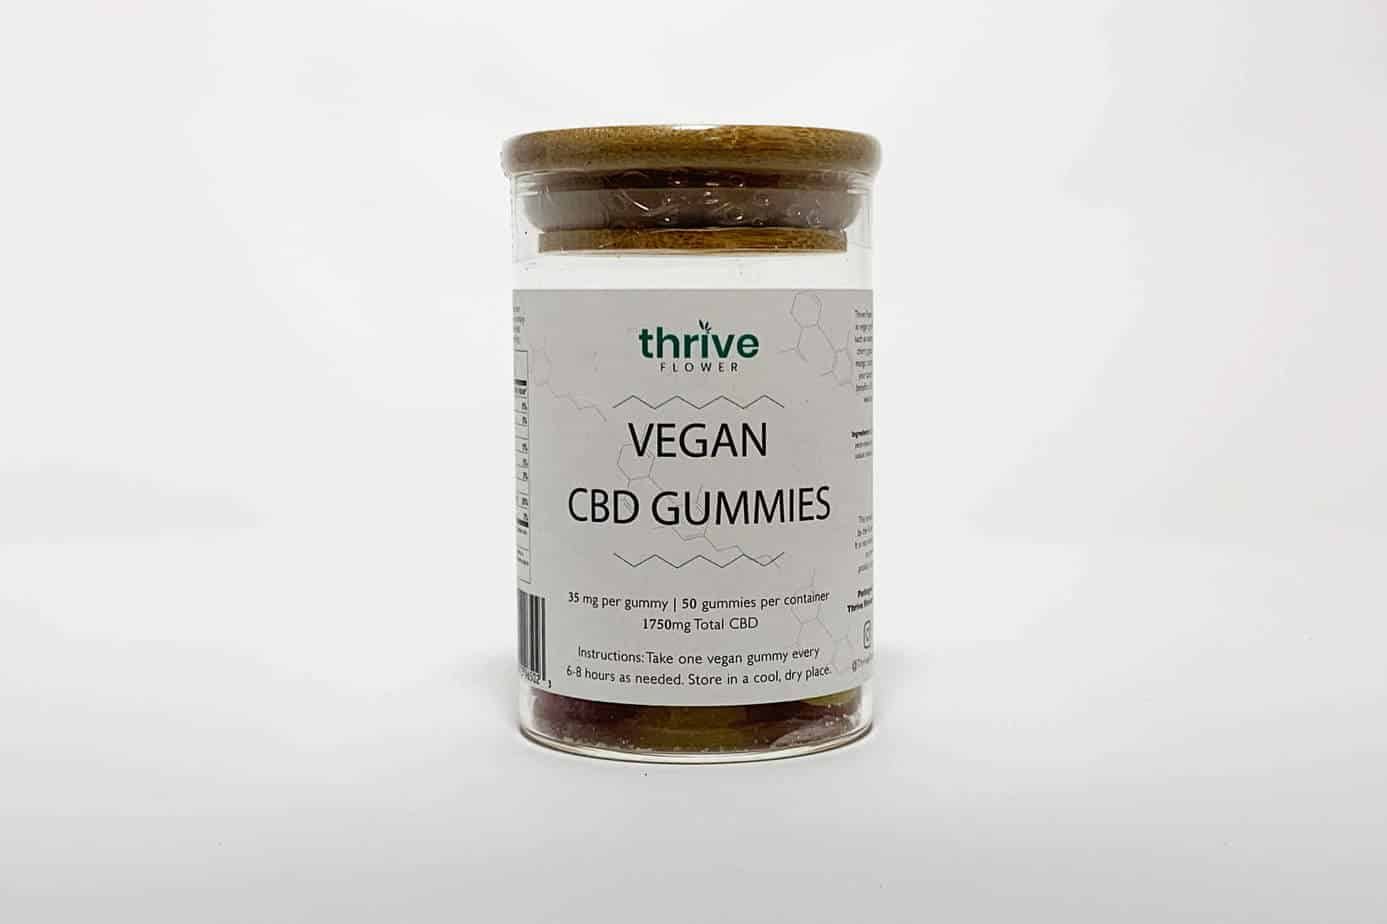 Thrive Flower CBD Vegan Gummy Bears 1750mg Review | Real Tested CBD